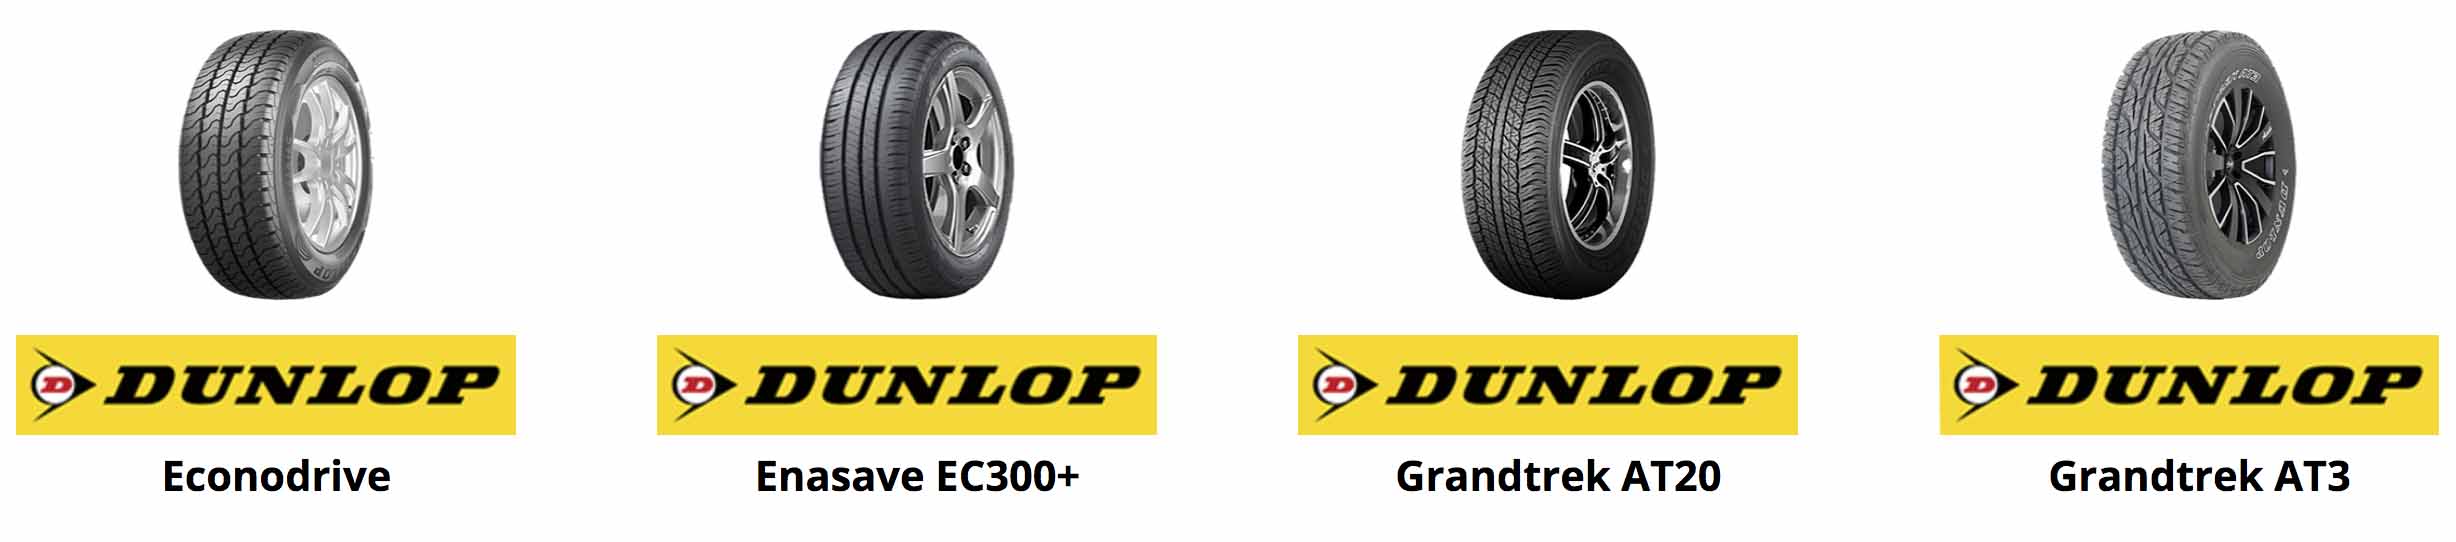 Dunlop tyres slide cardiff